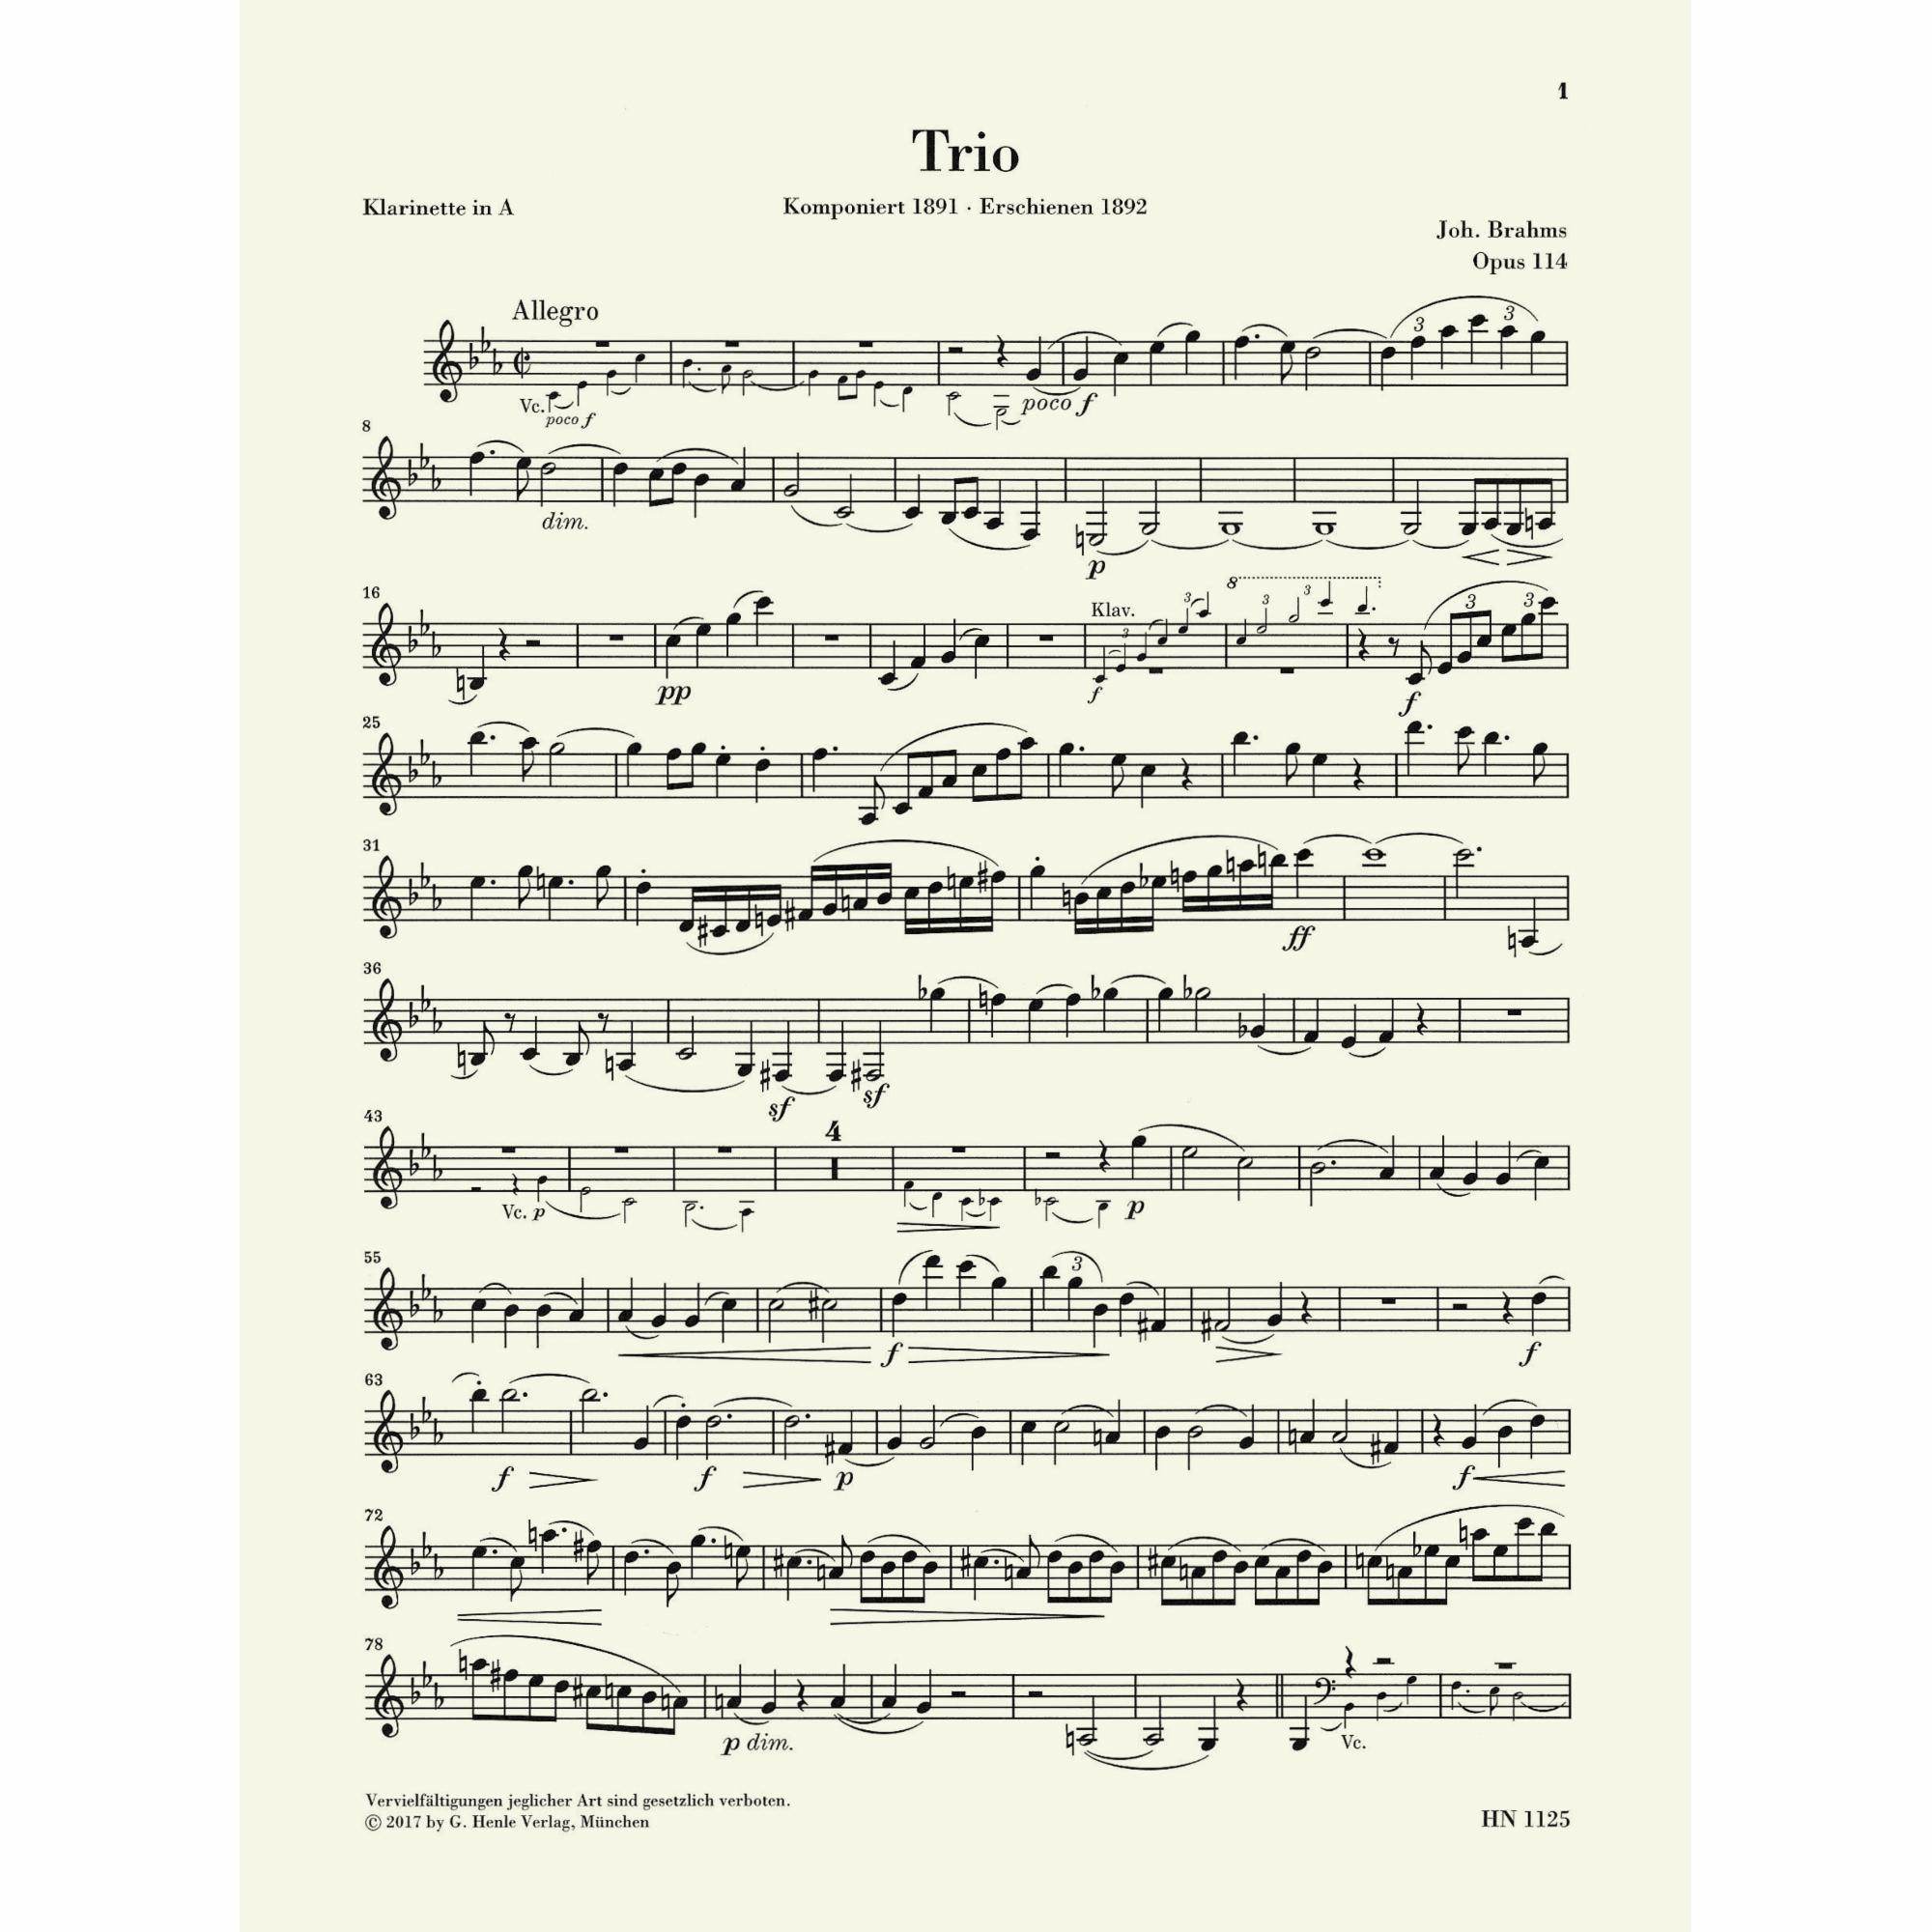 Sample: Clarinet (Pg. 1)